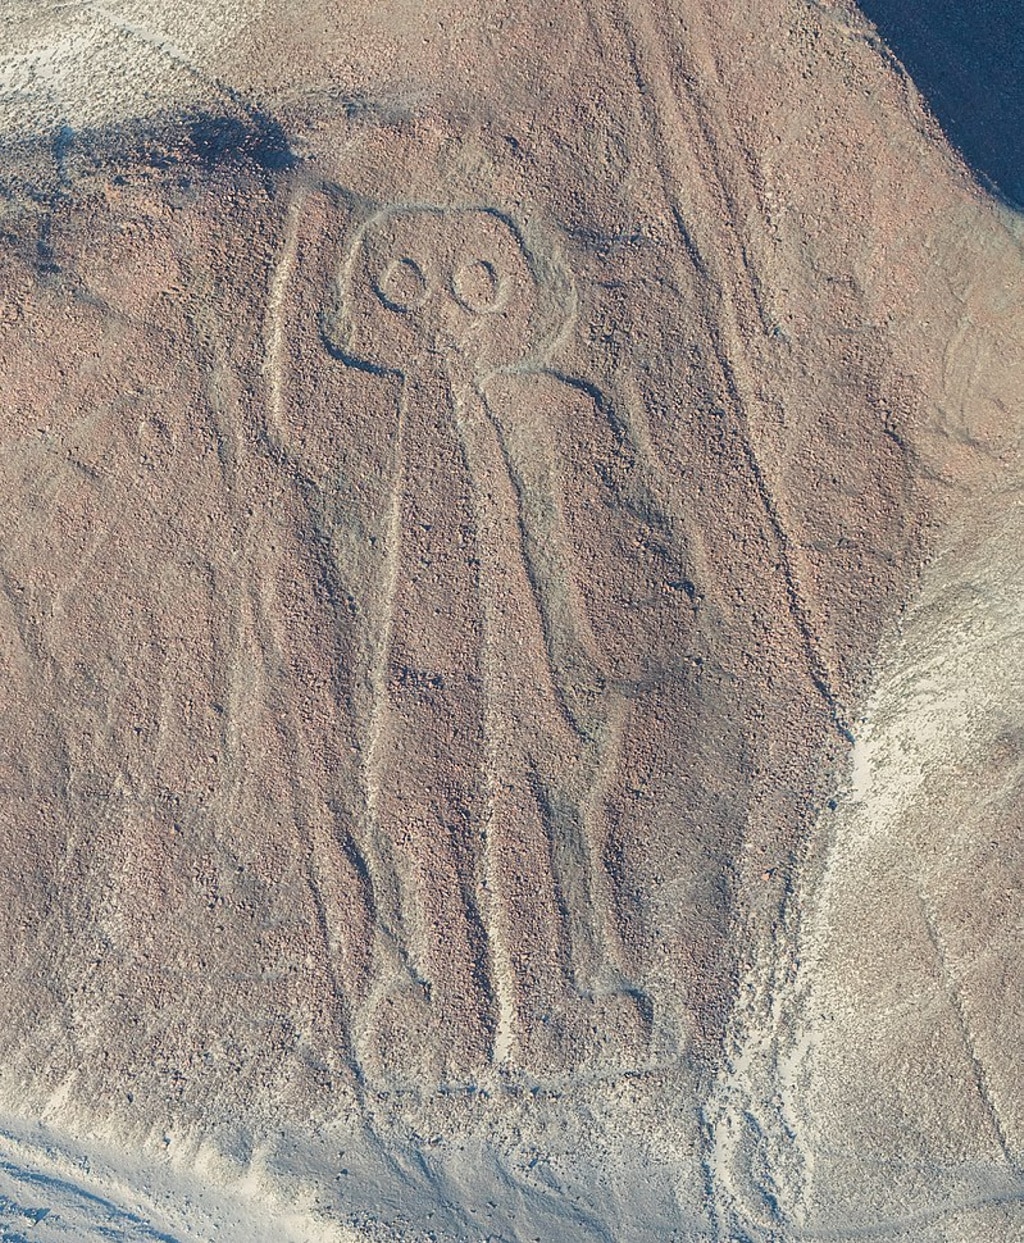 Descubren 50 nuevos dibujos en Nazca